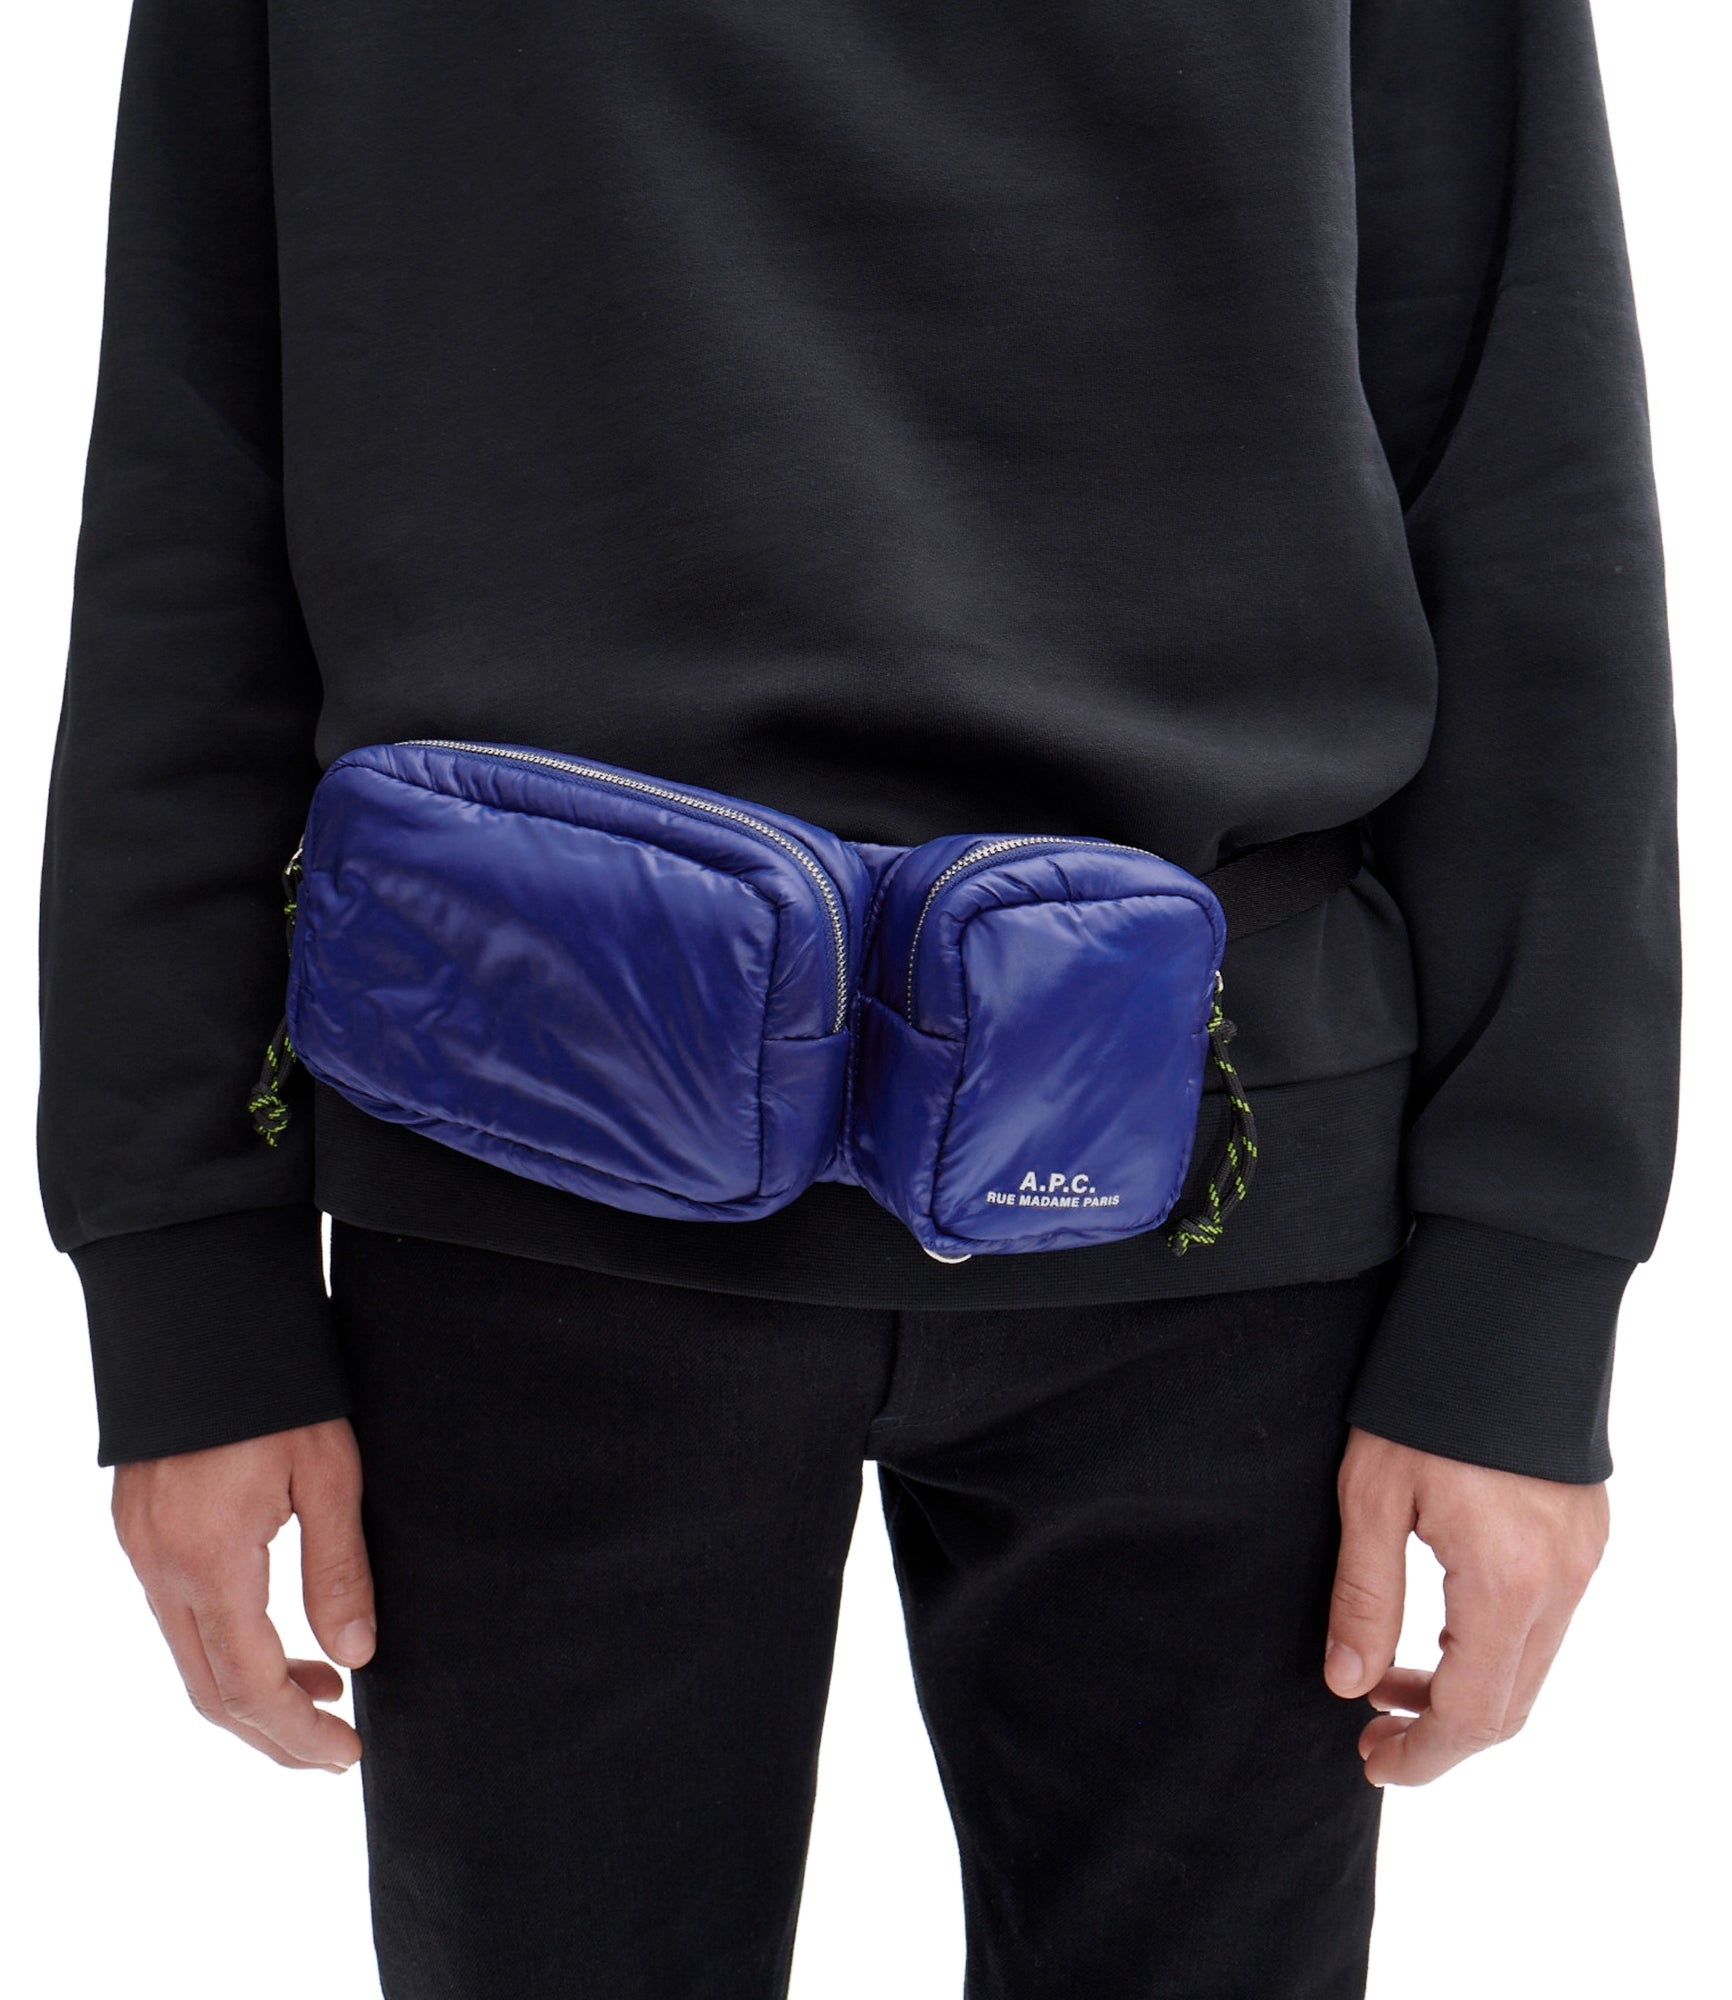 Paris Buckle Belt Bag | Cream | FINAL SALE